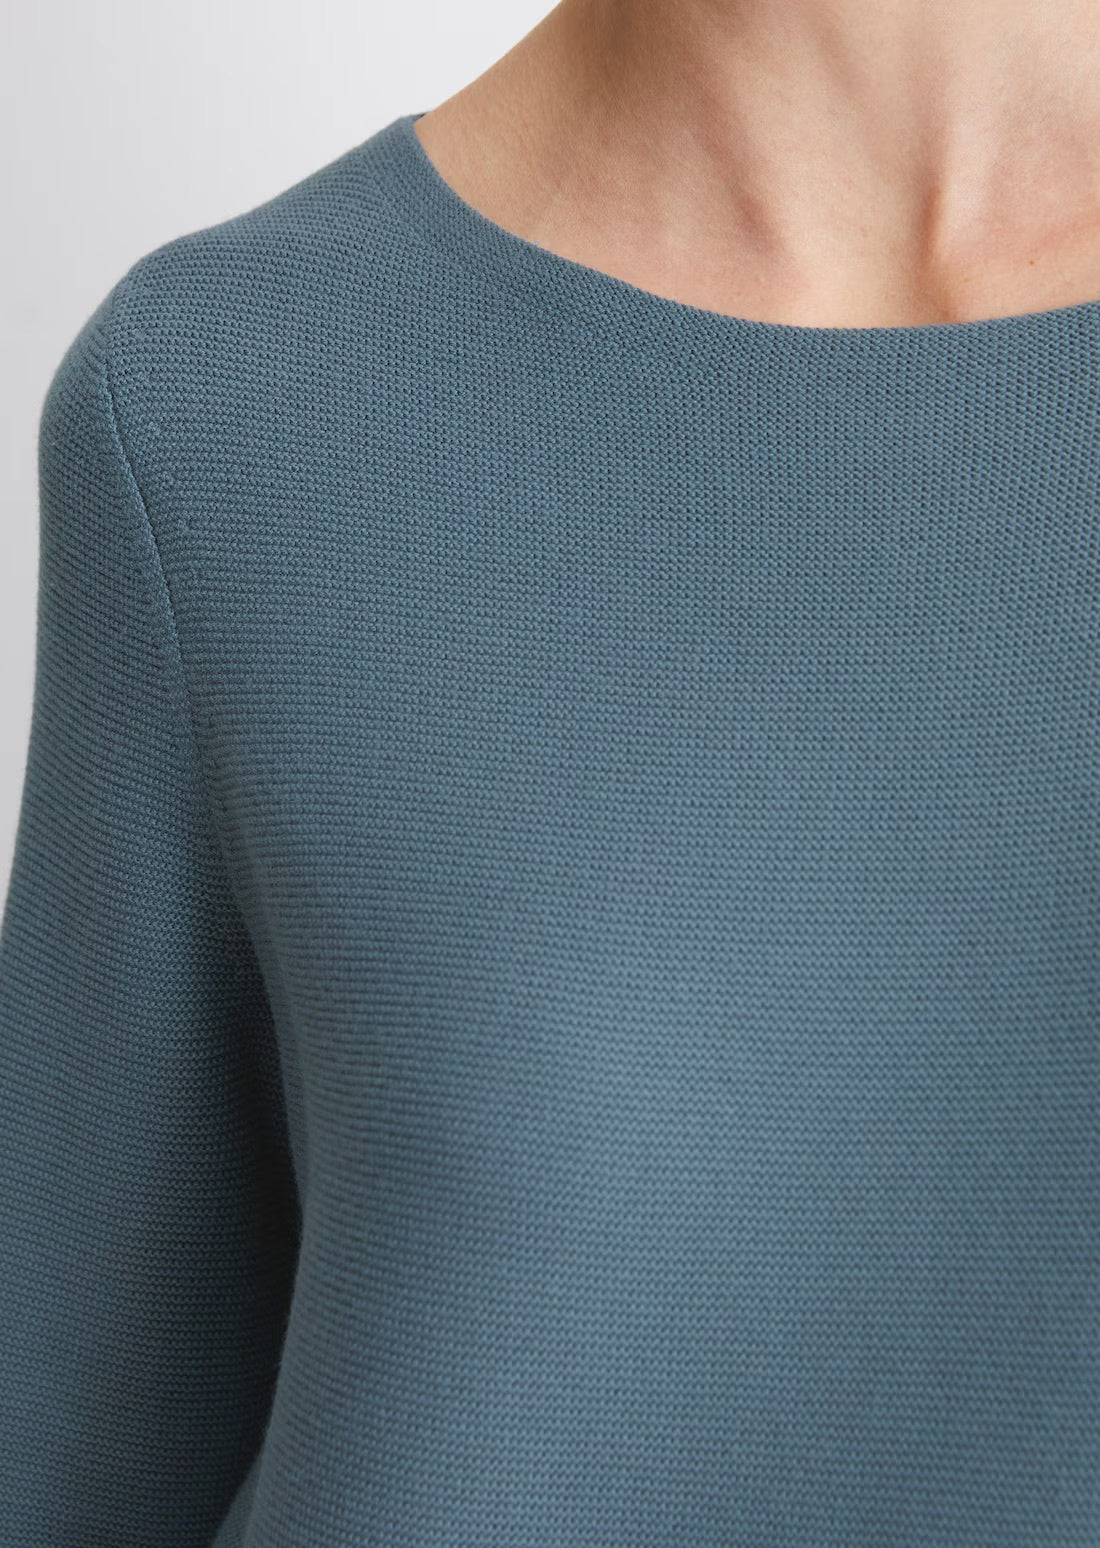 100% cotton sweater in hazy blue